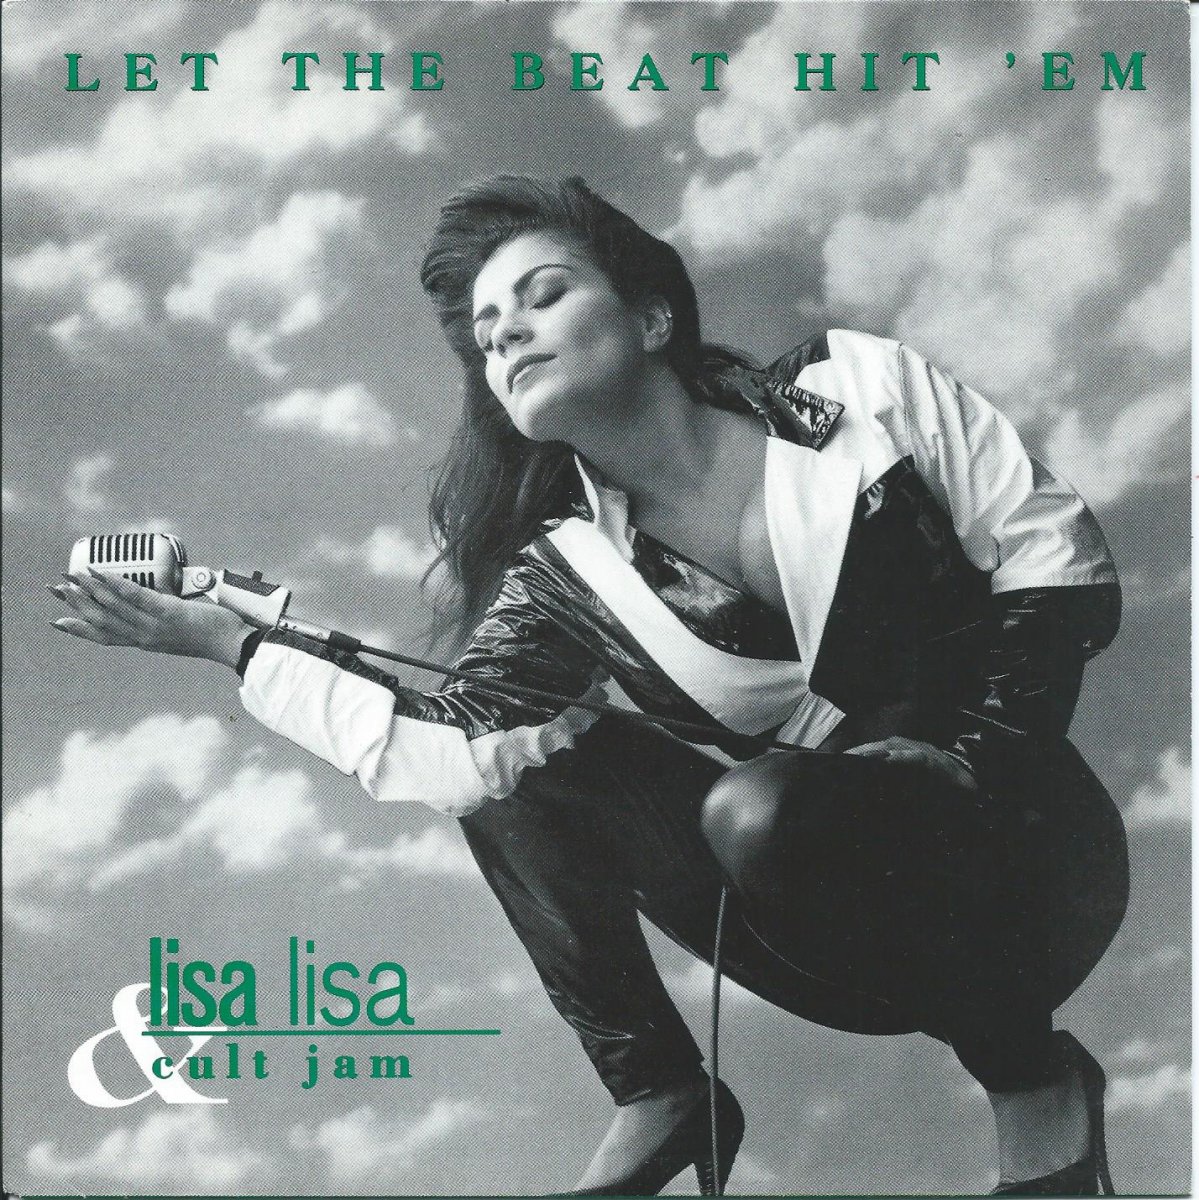 LISA LISA & CULT JAM / LET THE BEAT HIT 'EM (7